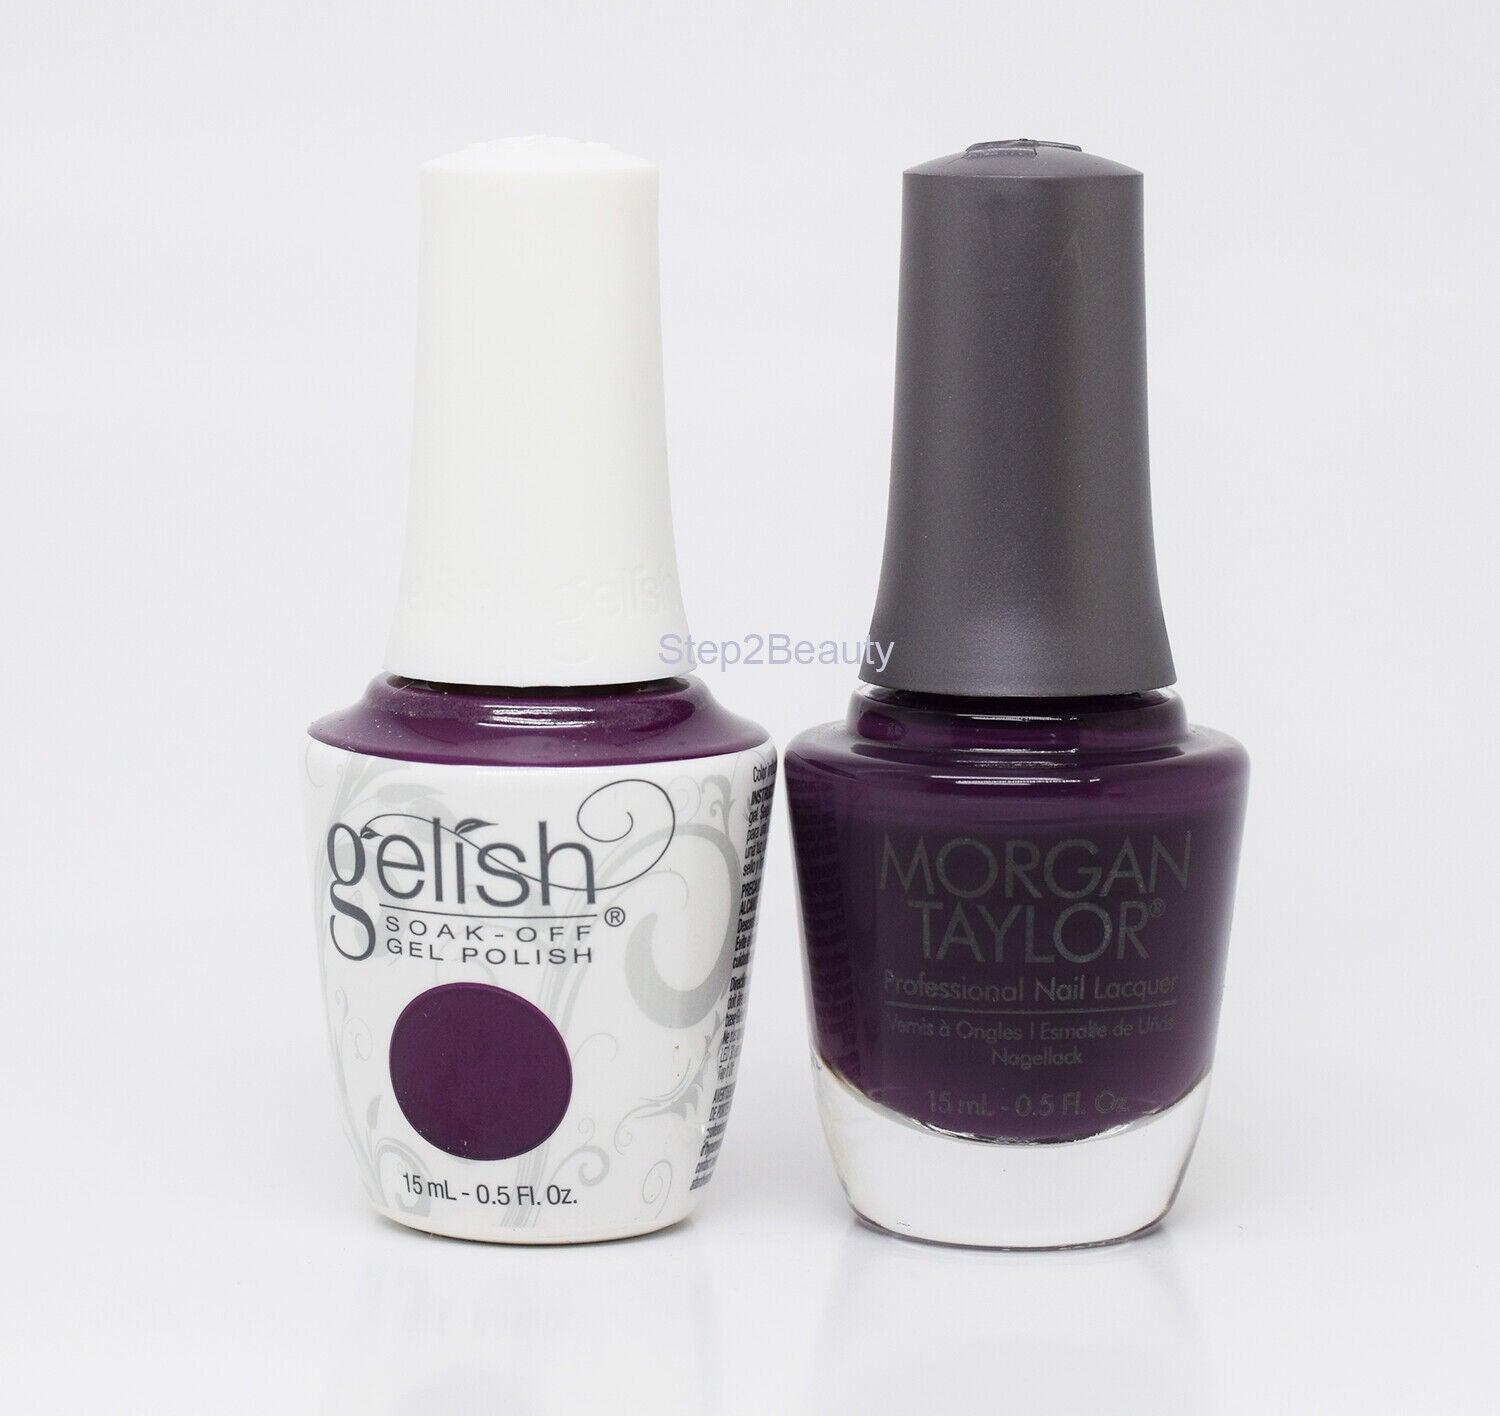 Gelish DUO Soak Off Gel Polish + Morgan Taylor Nail Lacquer - #866 Plum And Done